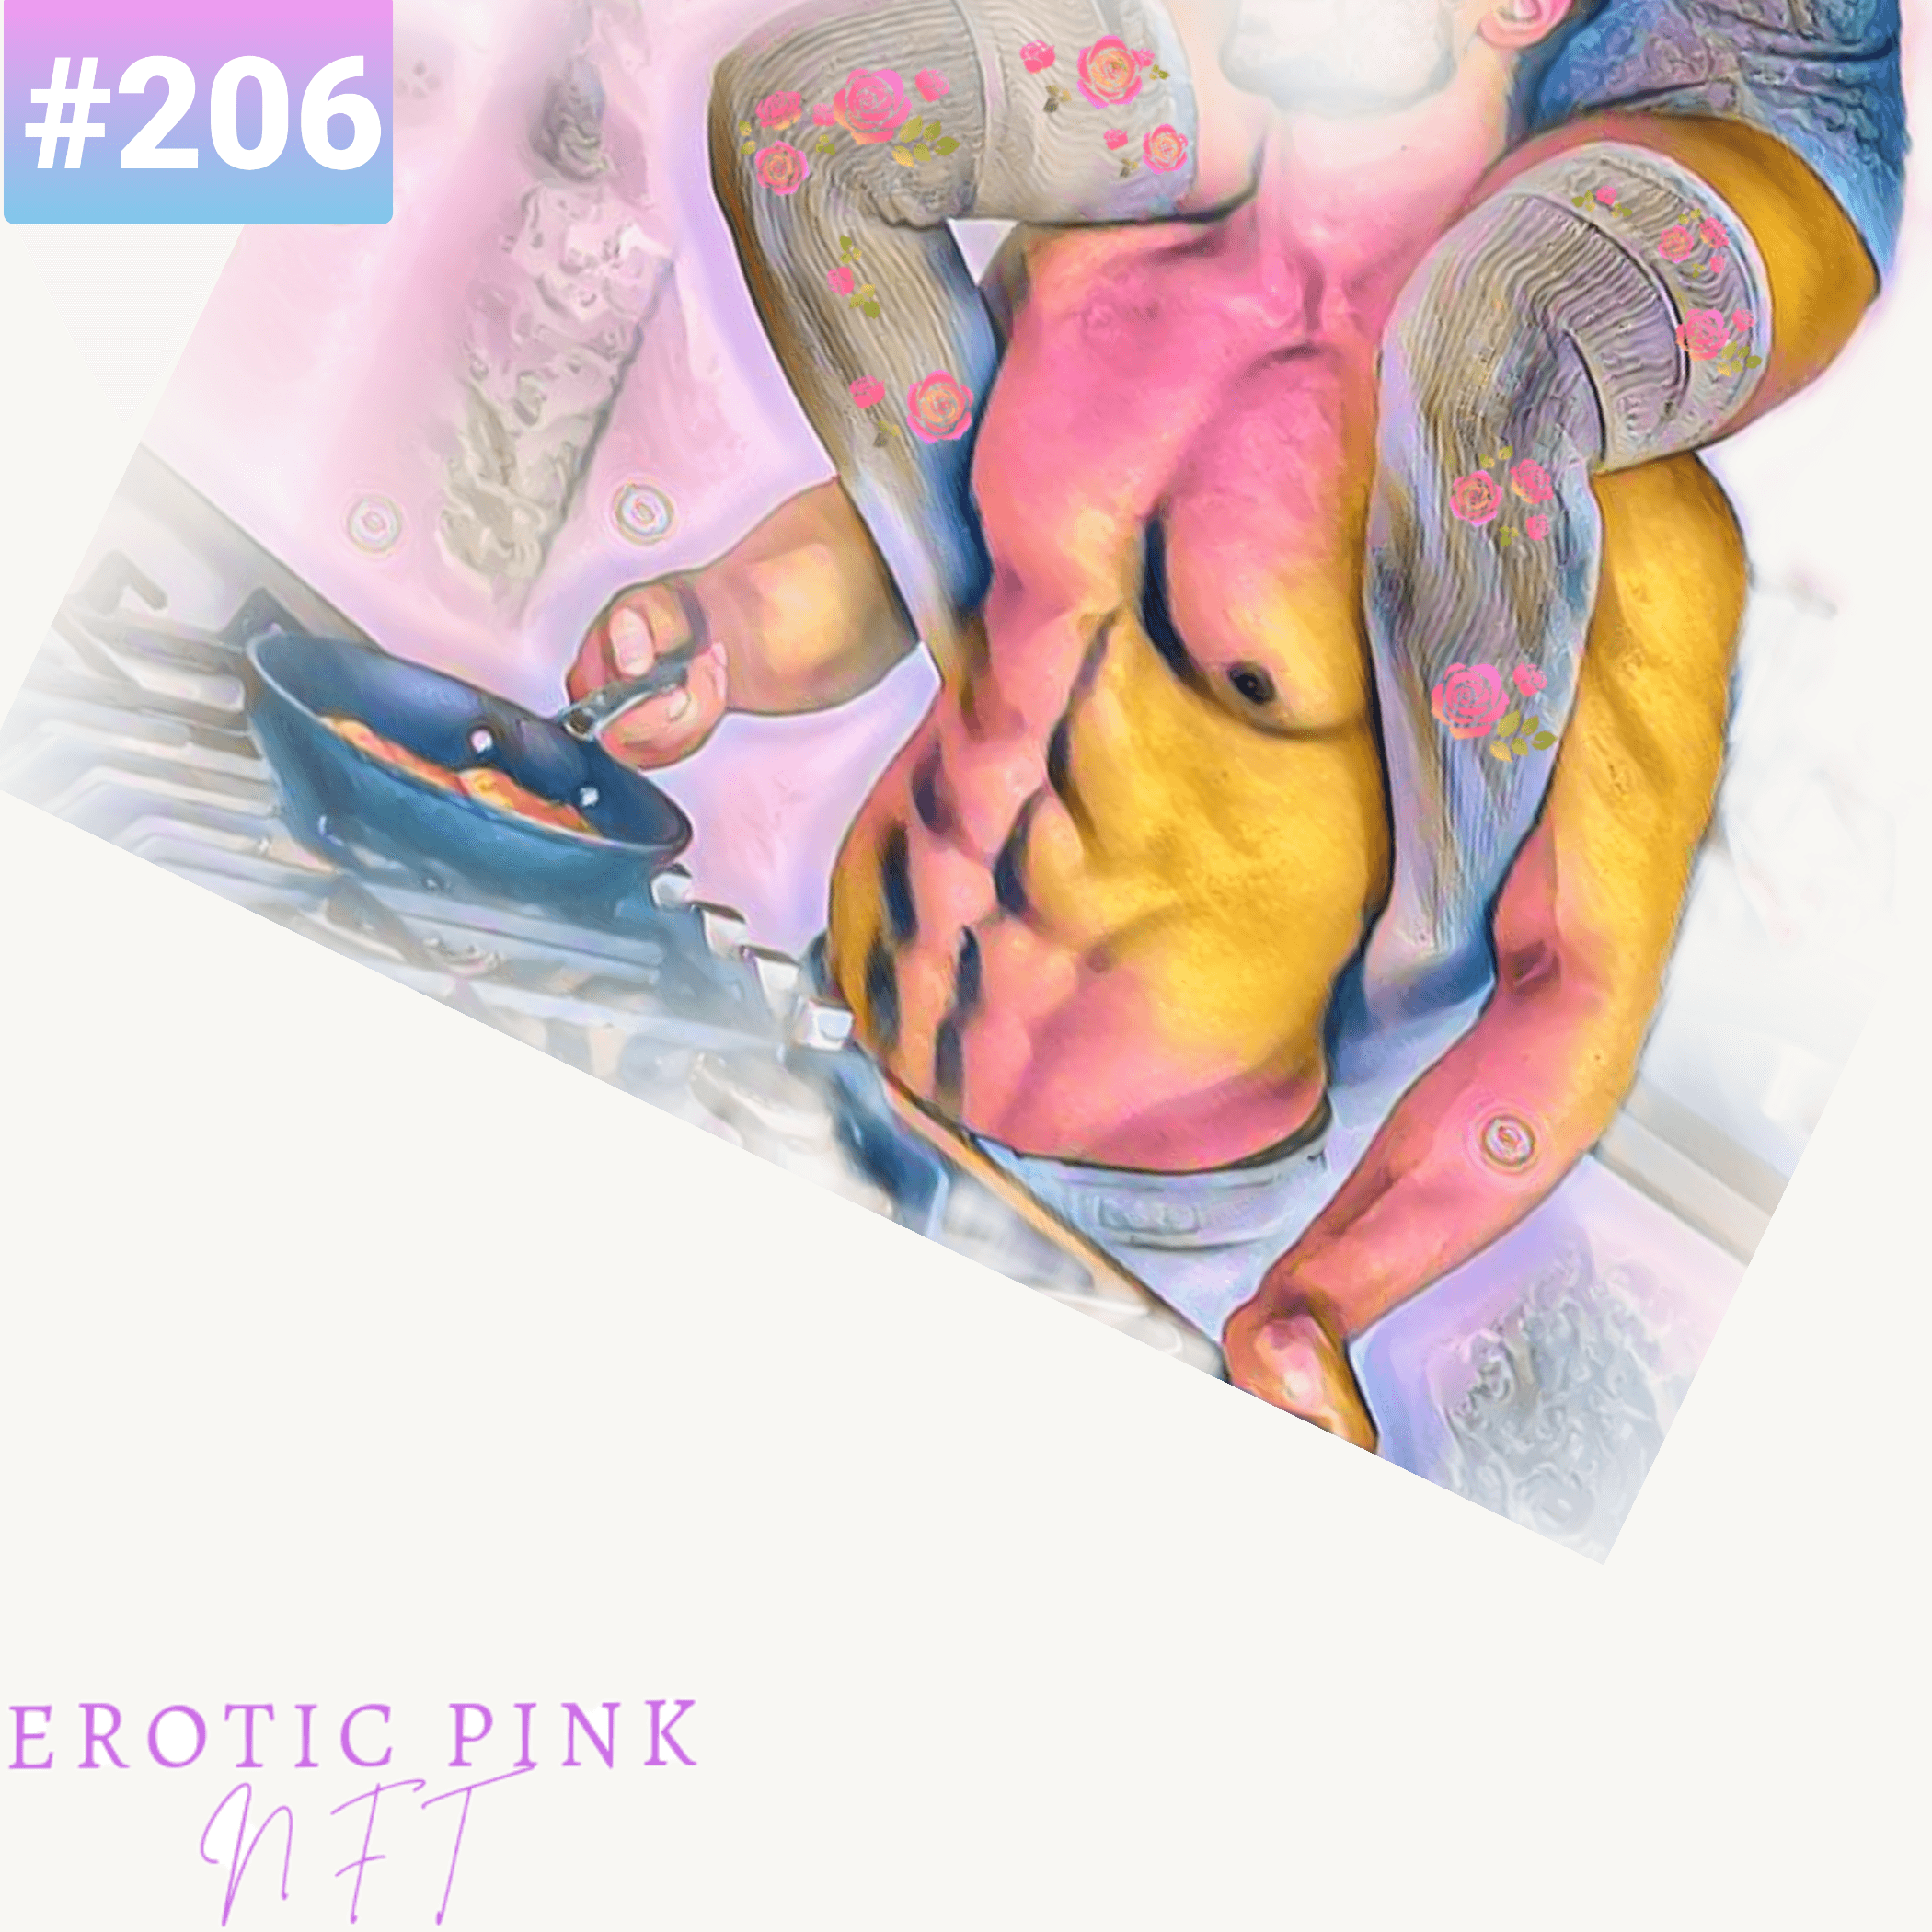 Erotic Pink #206